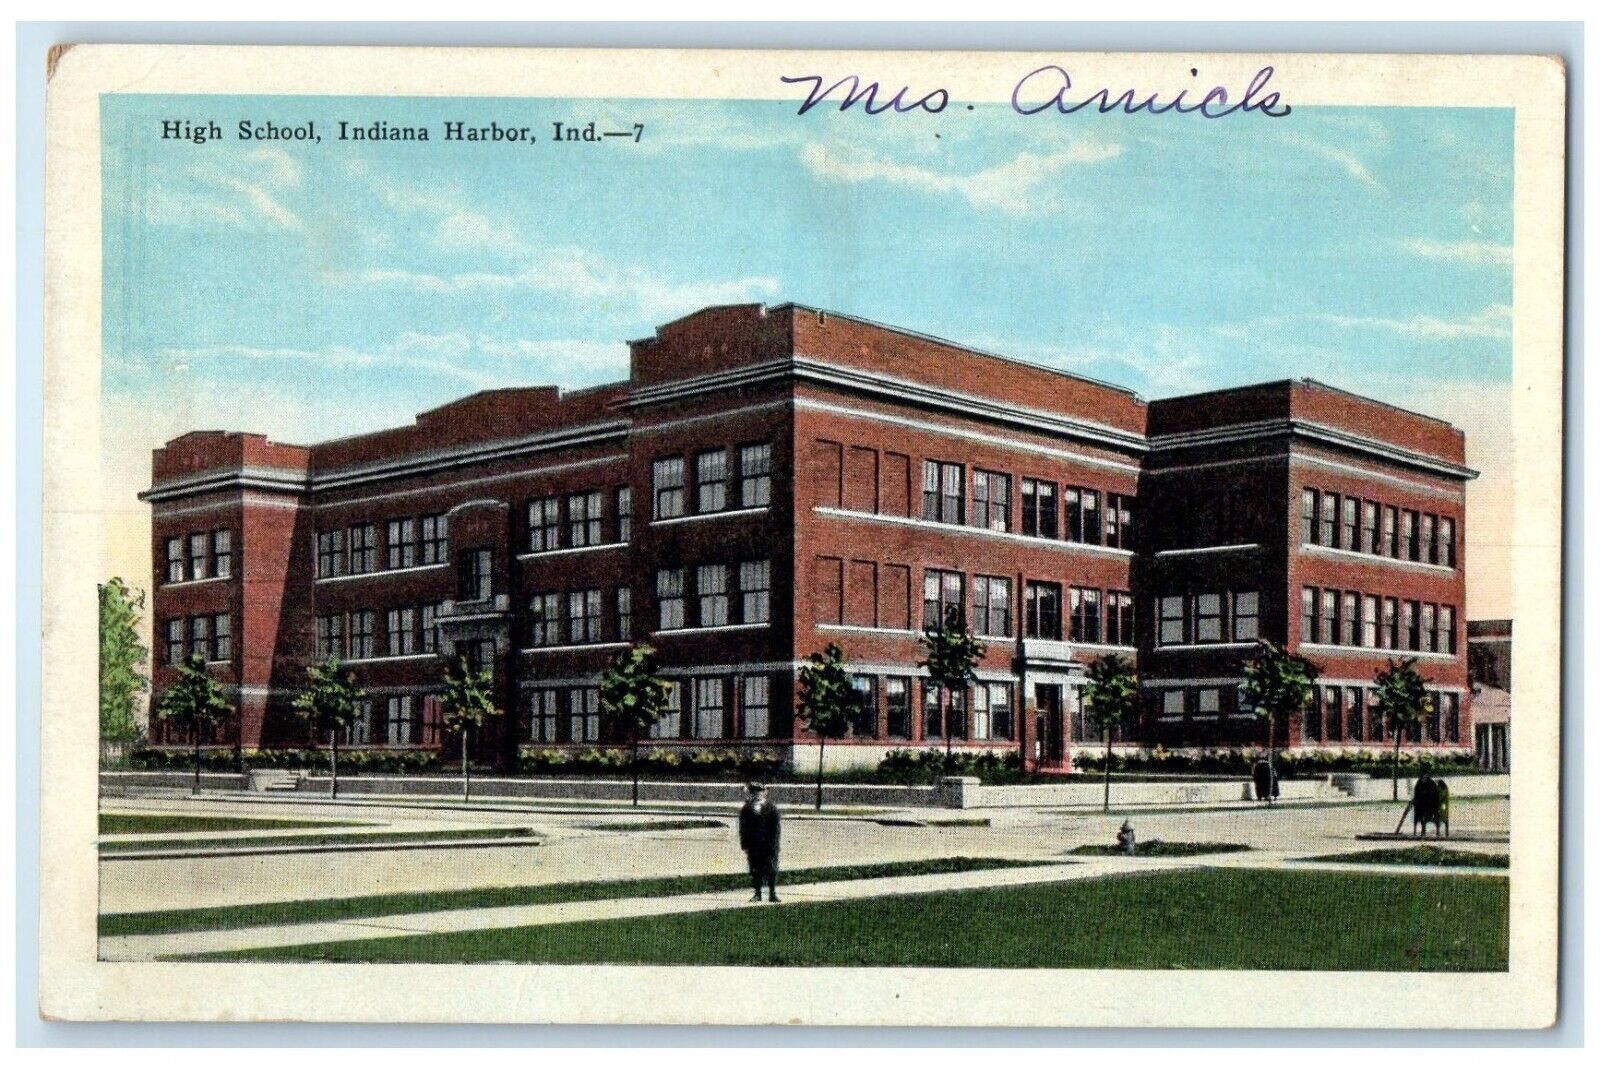 c1920 High School Exterior Building Indiana Harbor Indiana IN Vintage Postcard